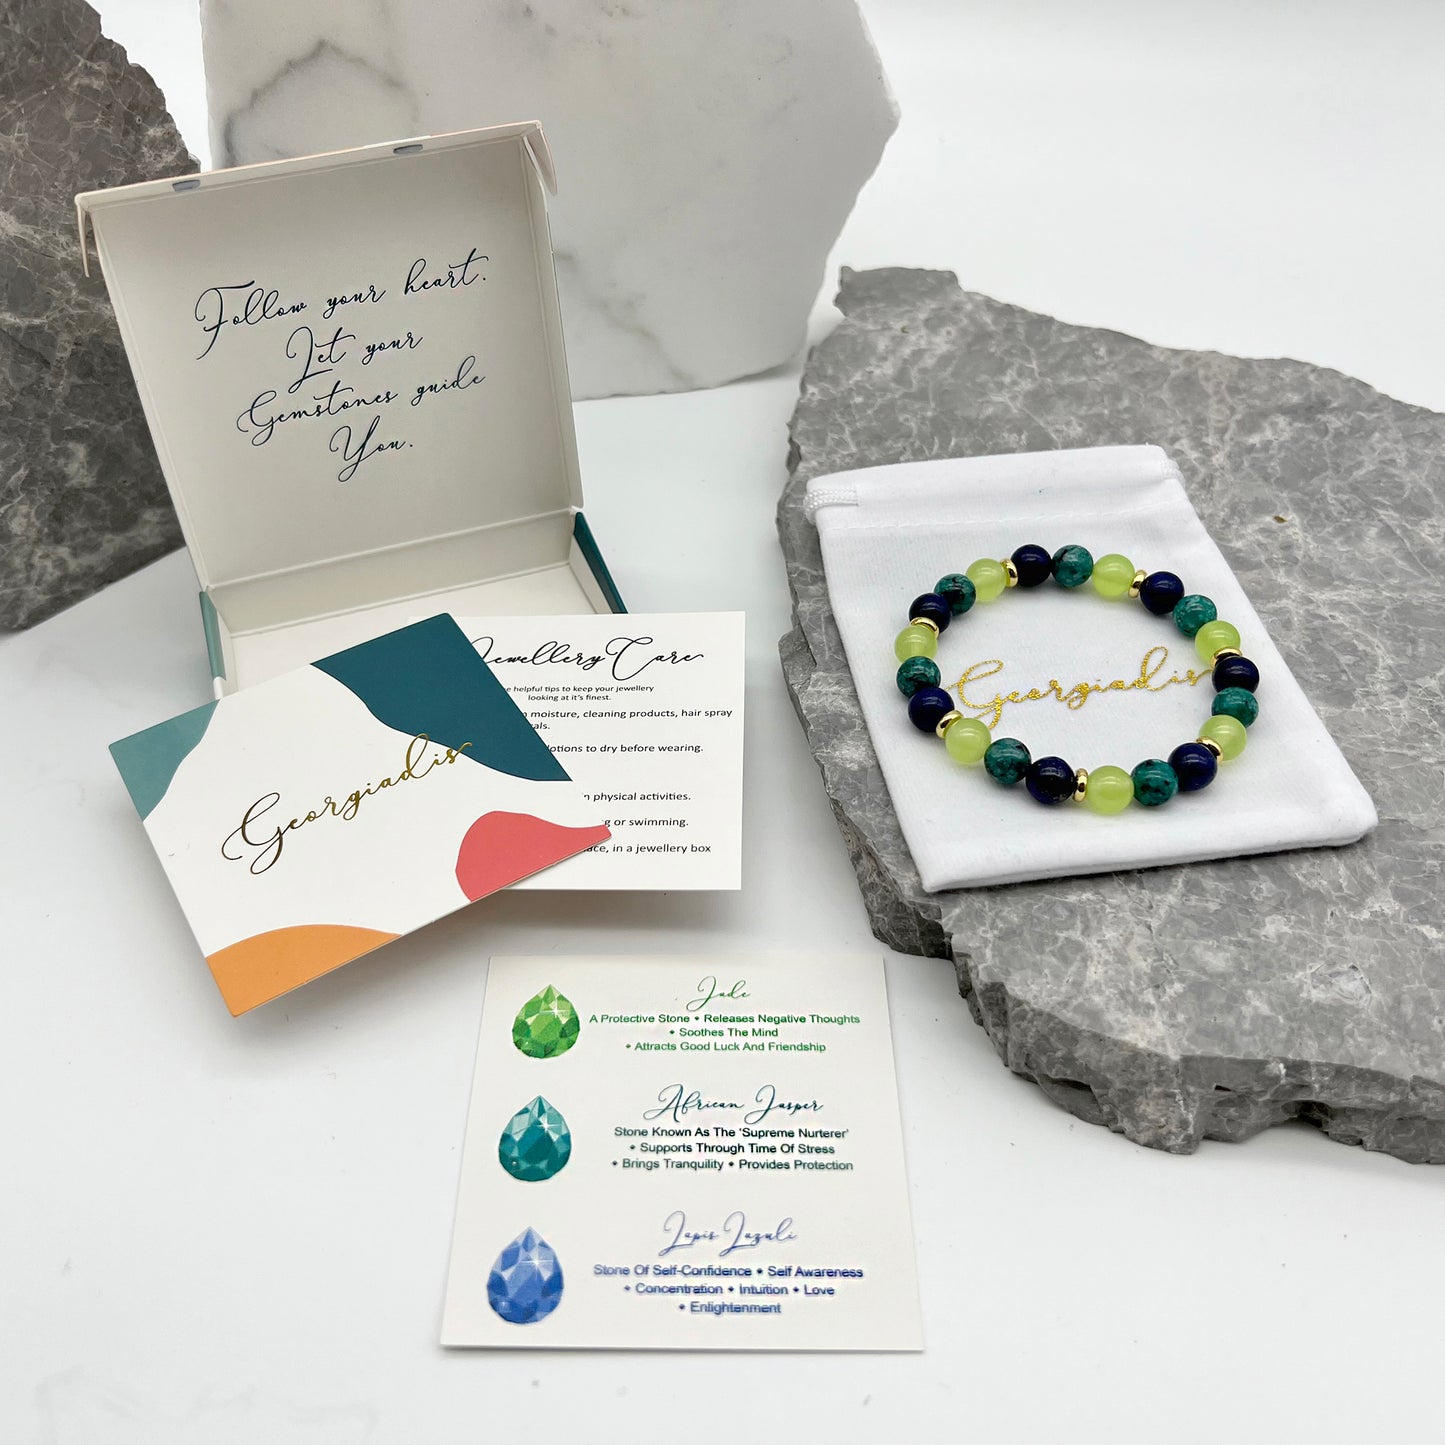 Beautiful Bracelet, Blue 8mm Lapis Lazuli, African Jasper, Light Green Jade Gemstones with 18k Gold-Plating, Crystal Healing Stones, Self-Confidence.